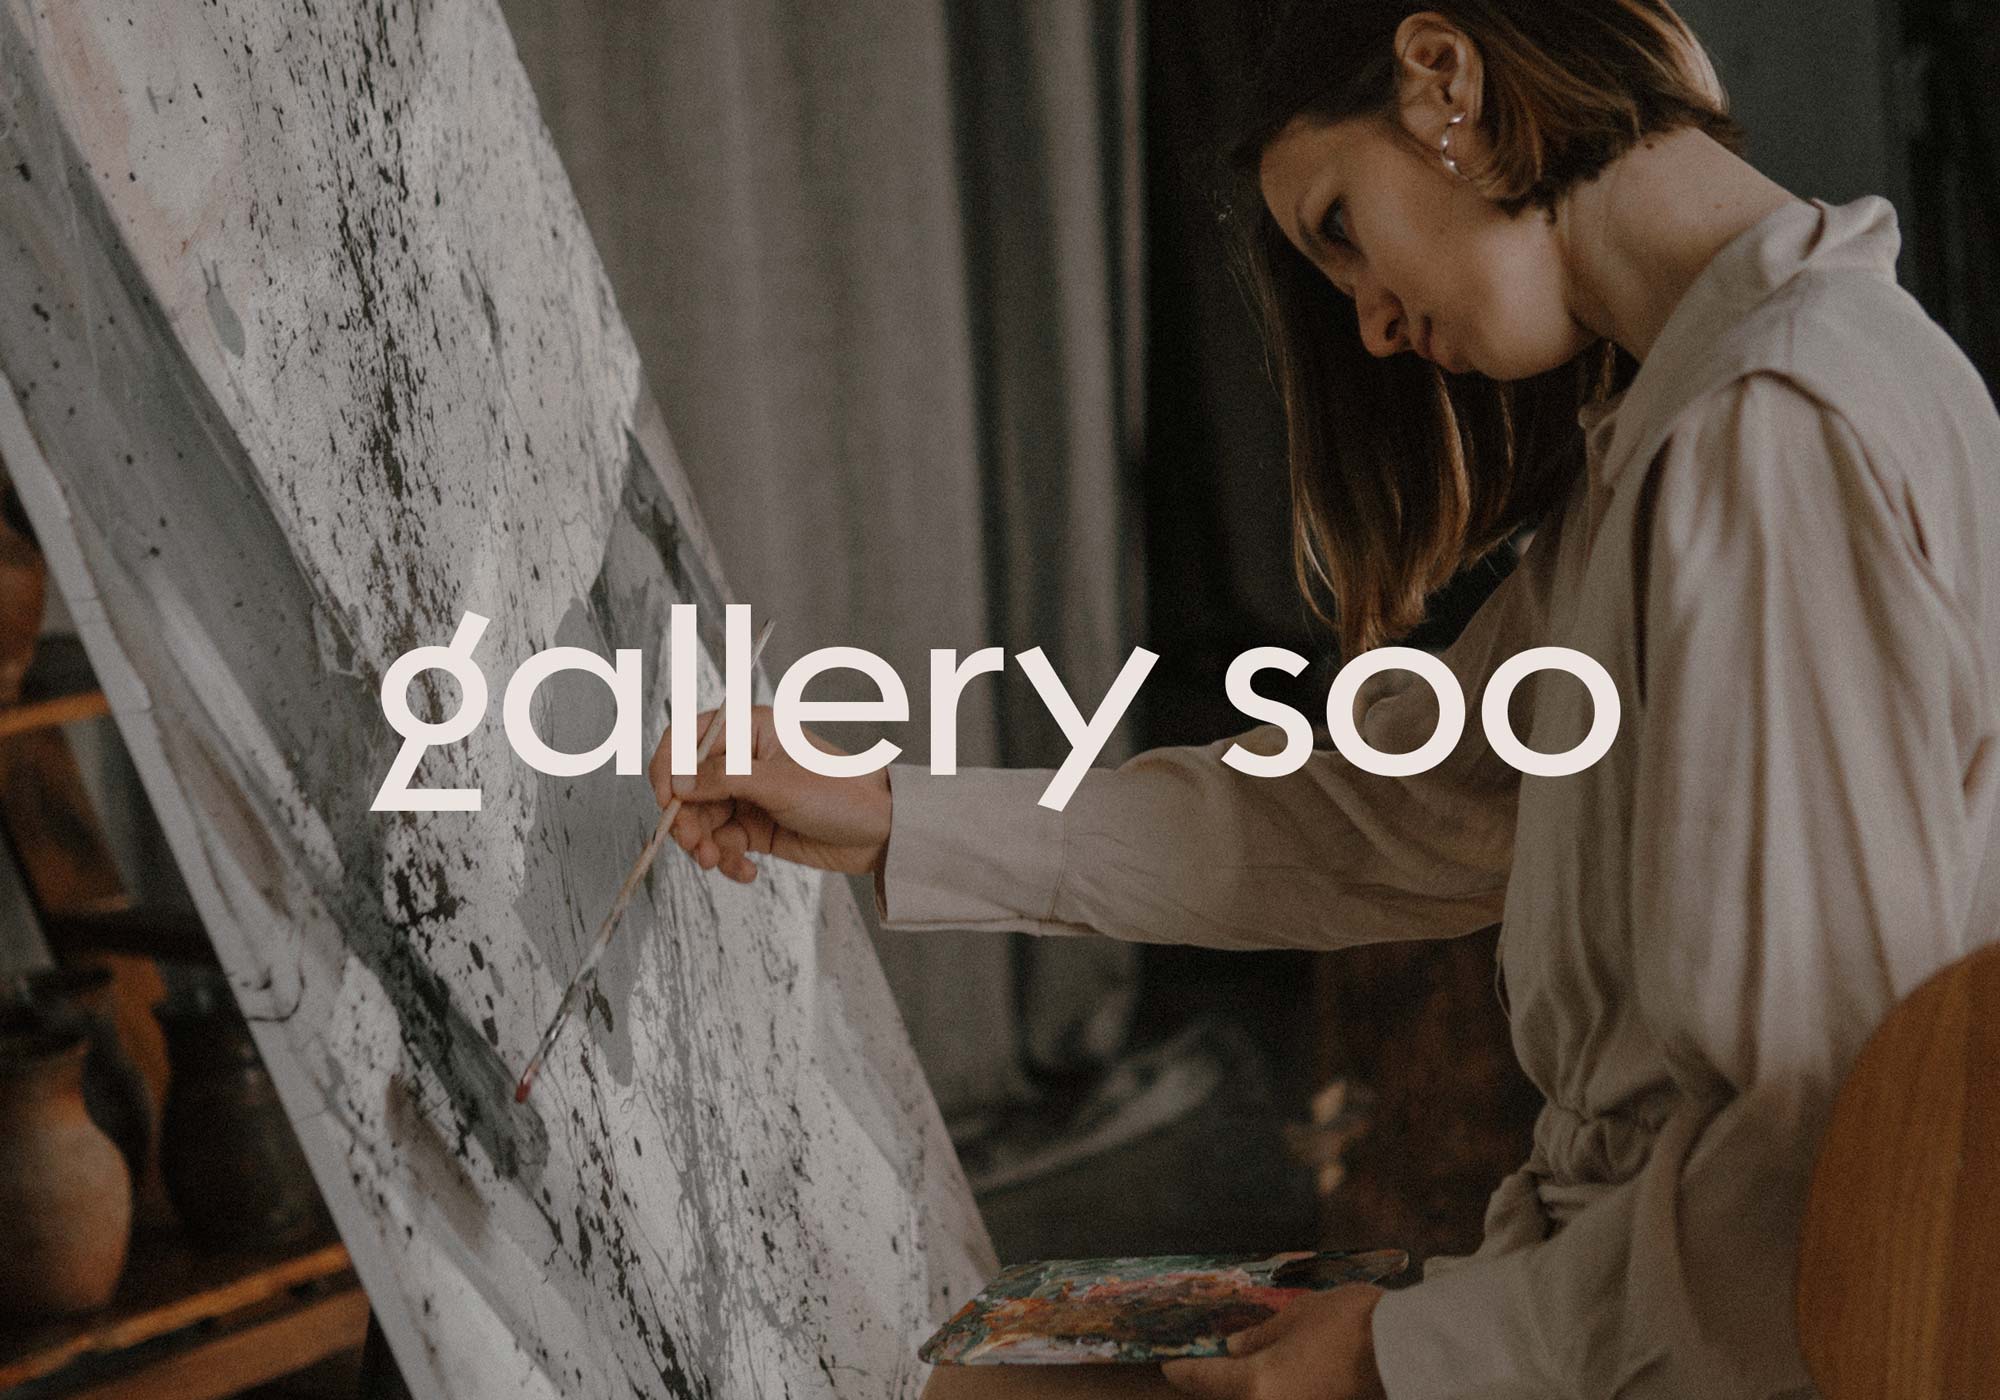 Gallery Soo by The Brand Bazaar